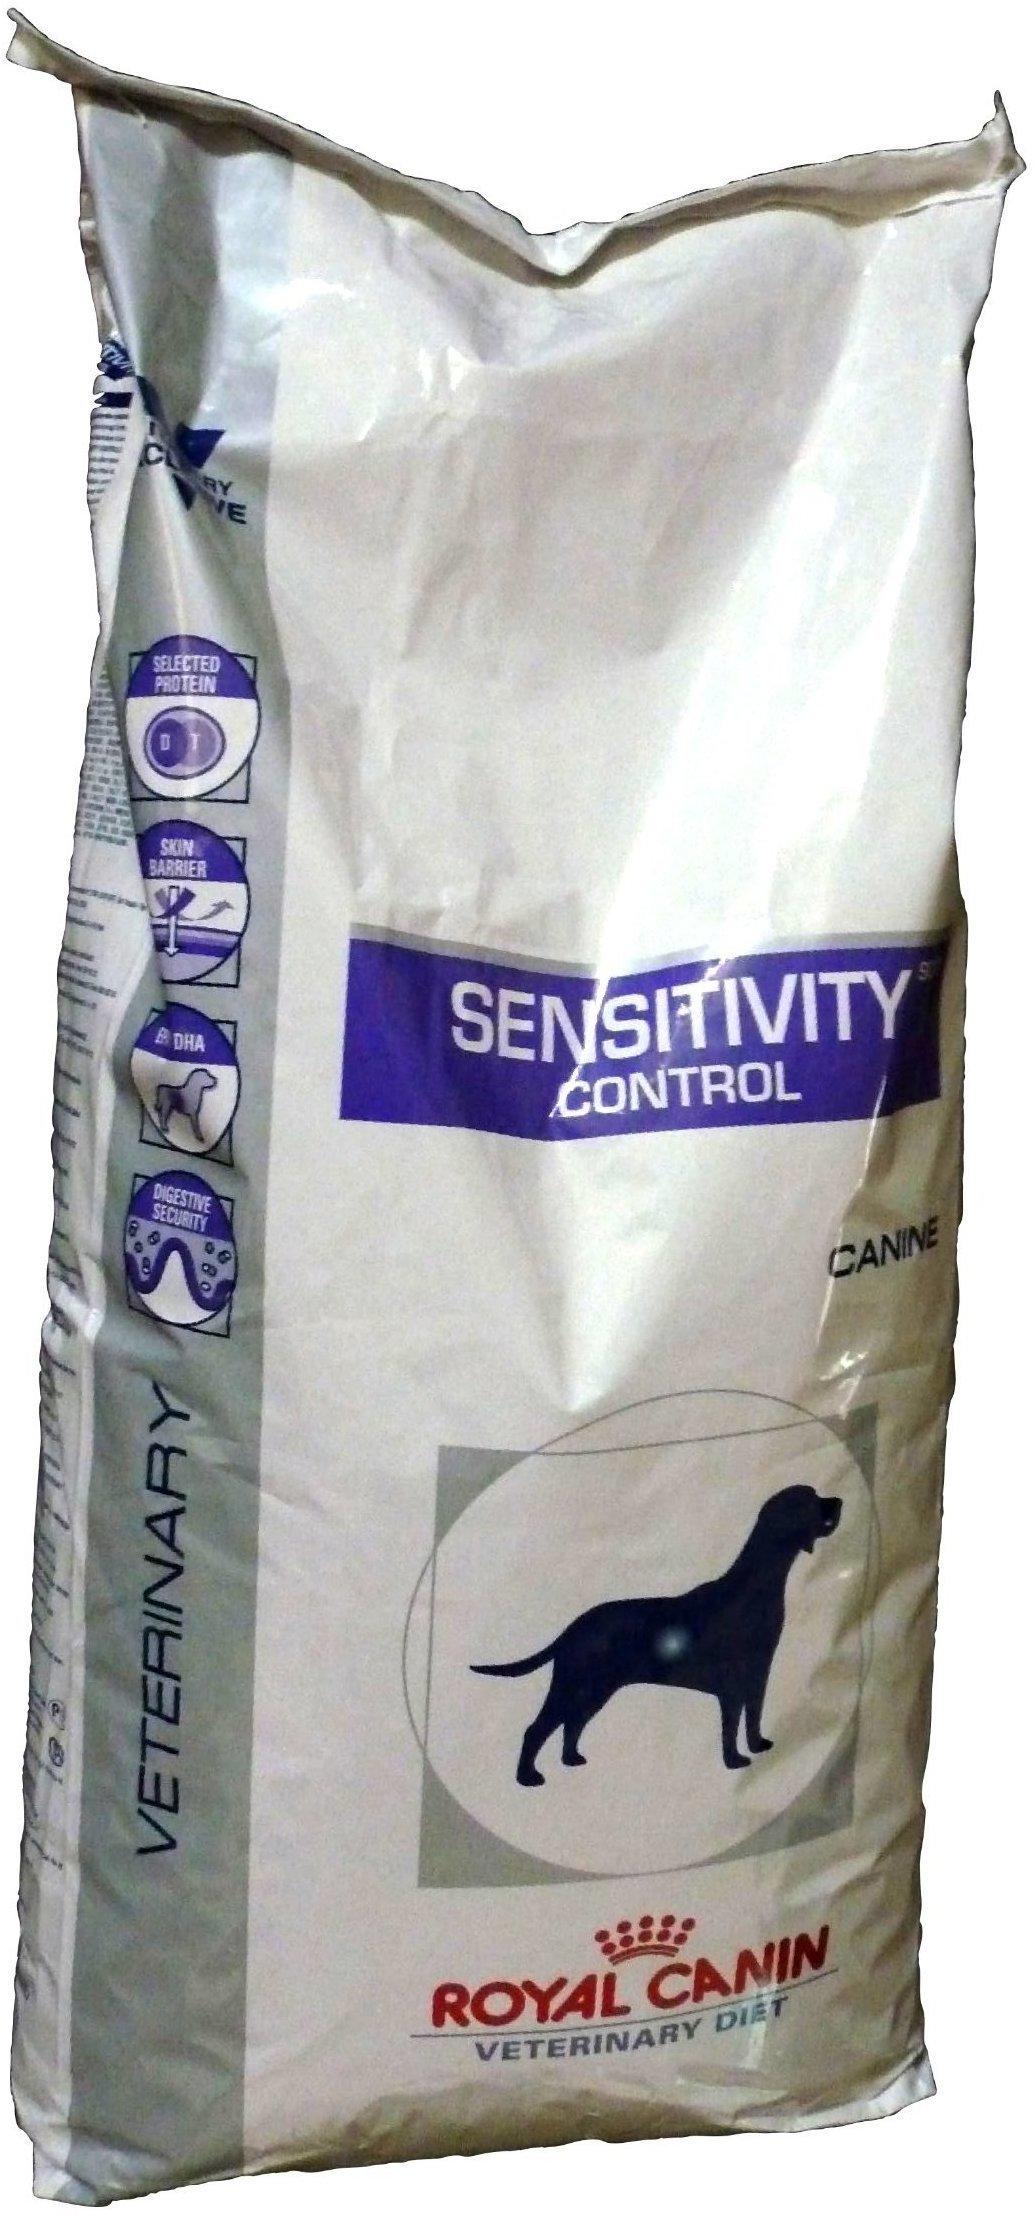 Royal Canin sensitivity Control sc21 (утка). Корм Роял Канин Сенситив контроль для собак. Сенситив конт Канин. Роял Канин Сенситив контрол 14 кг. Sensitivity control